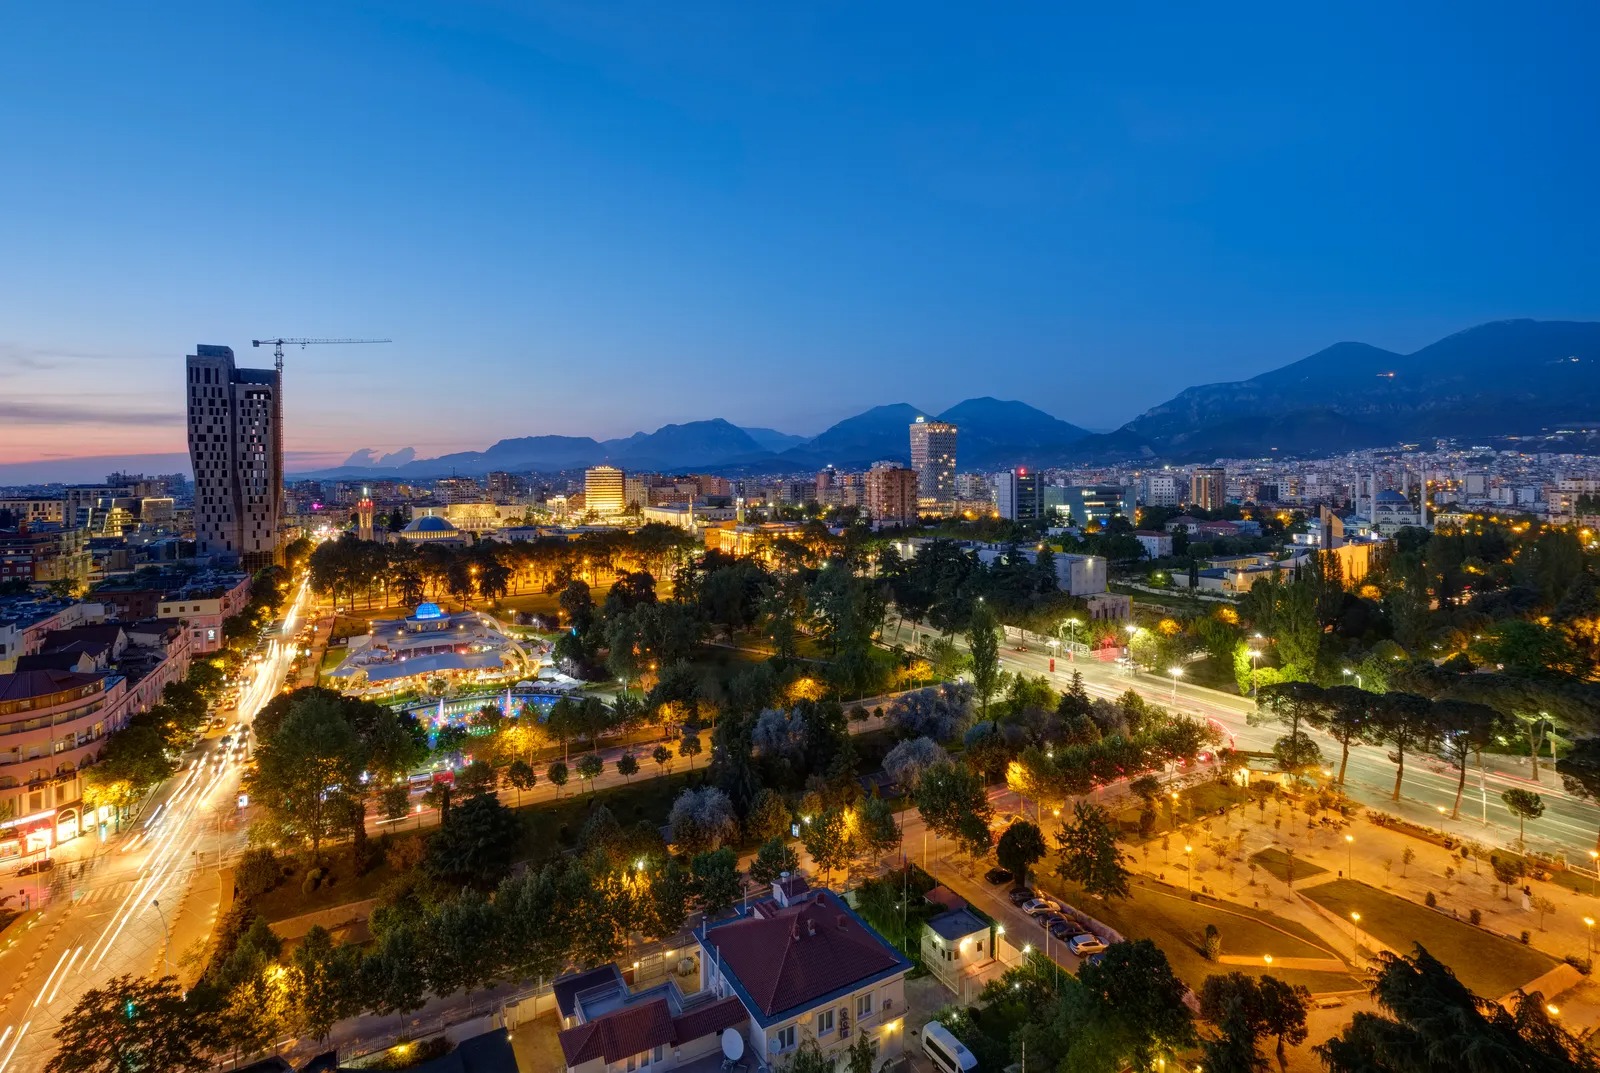 ”Vogue Italia”: Tirana, kryeqyteti me nuanca dhe dimensione europiane